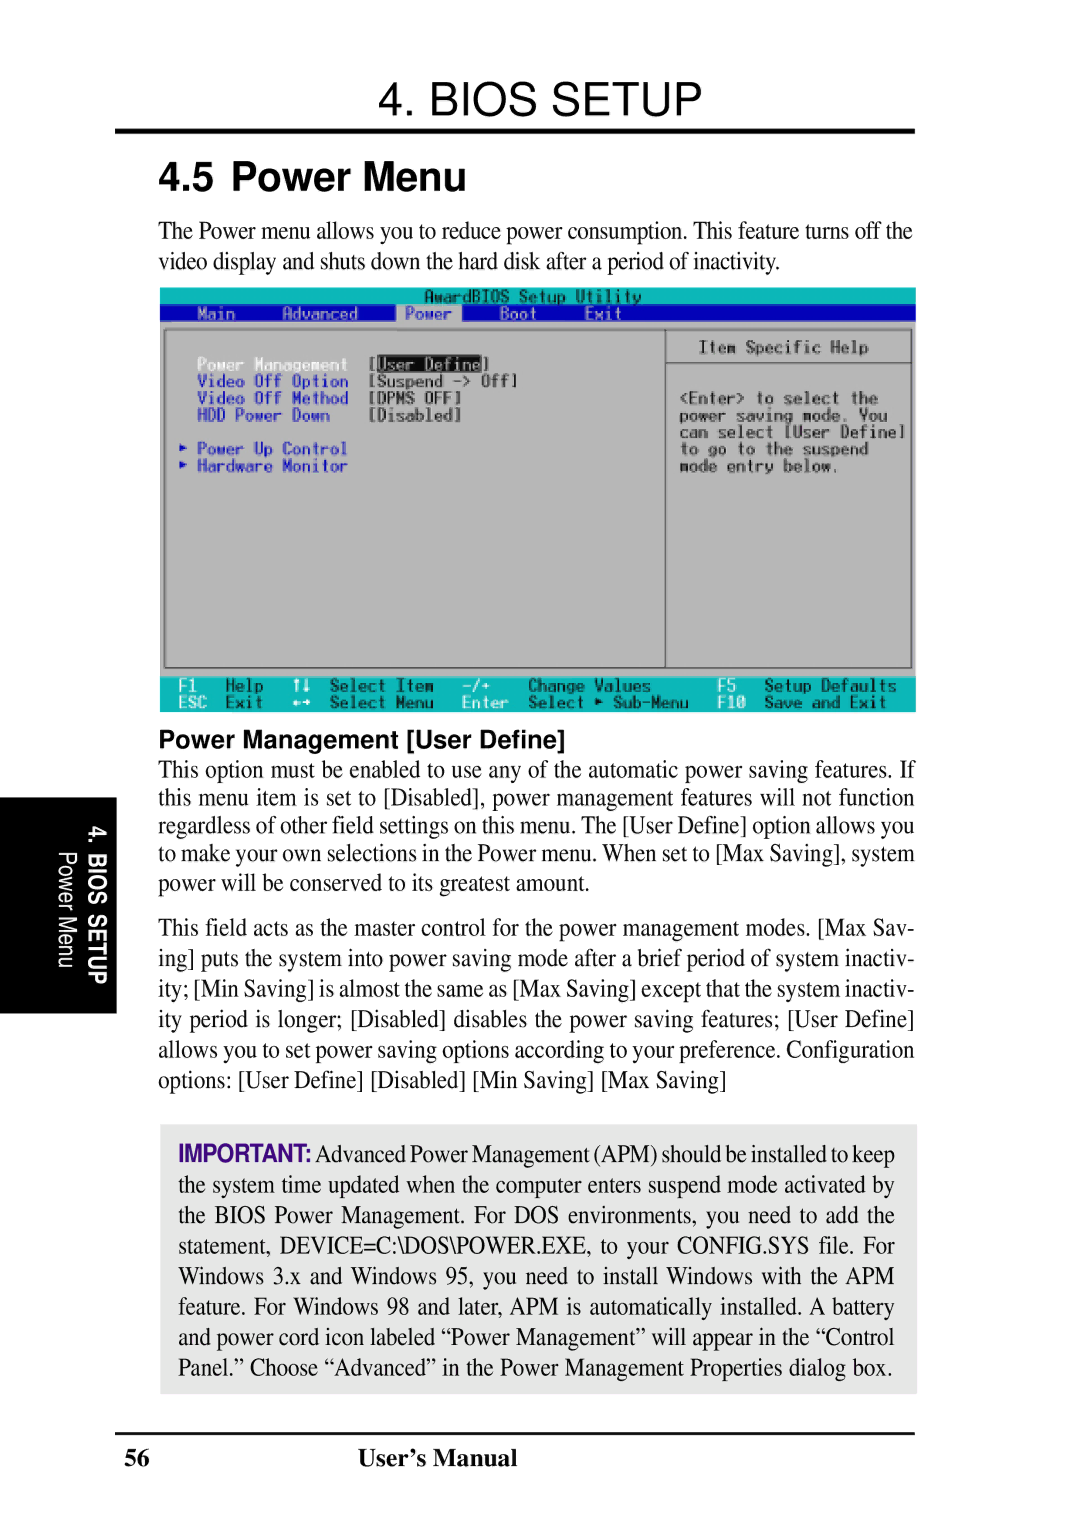 Fujitsu D1241 manual Power Menu, Power Management User Define 